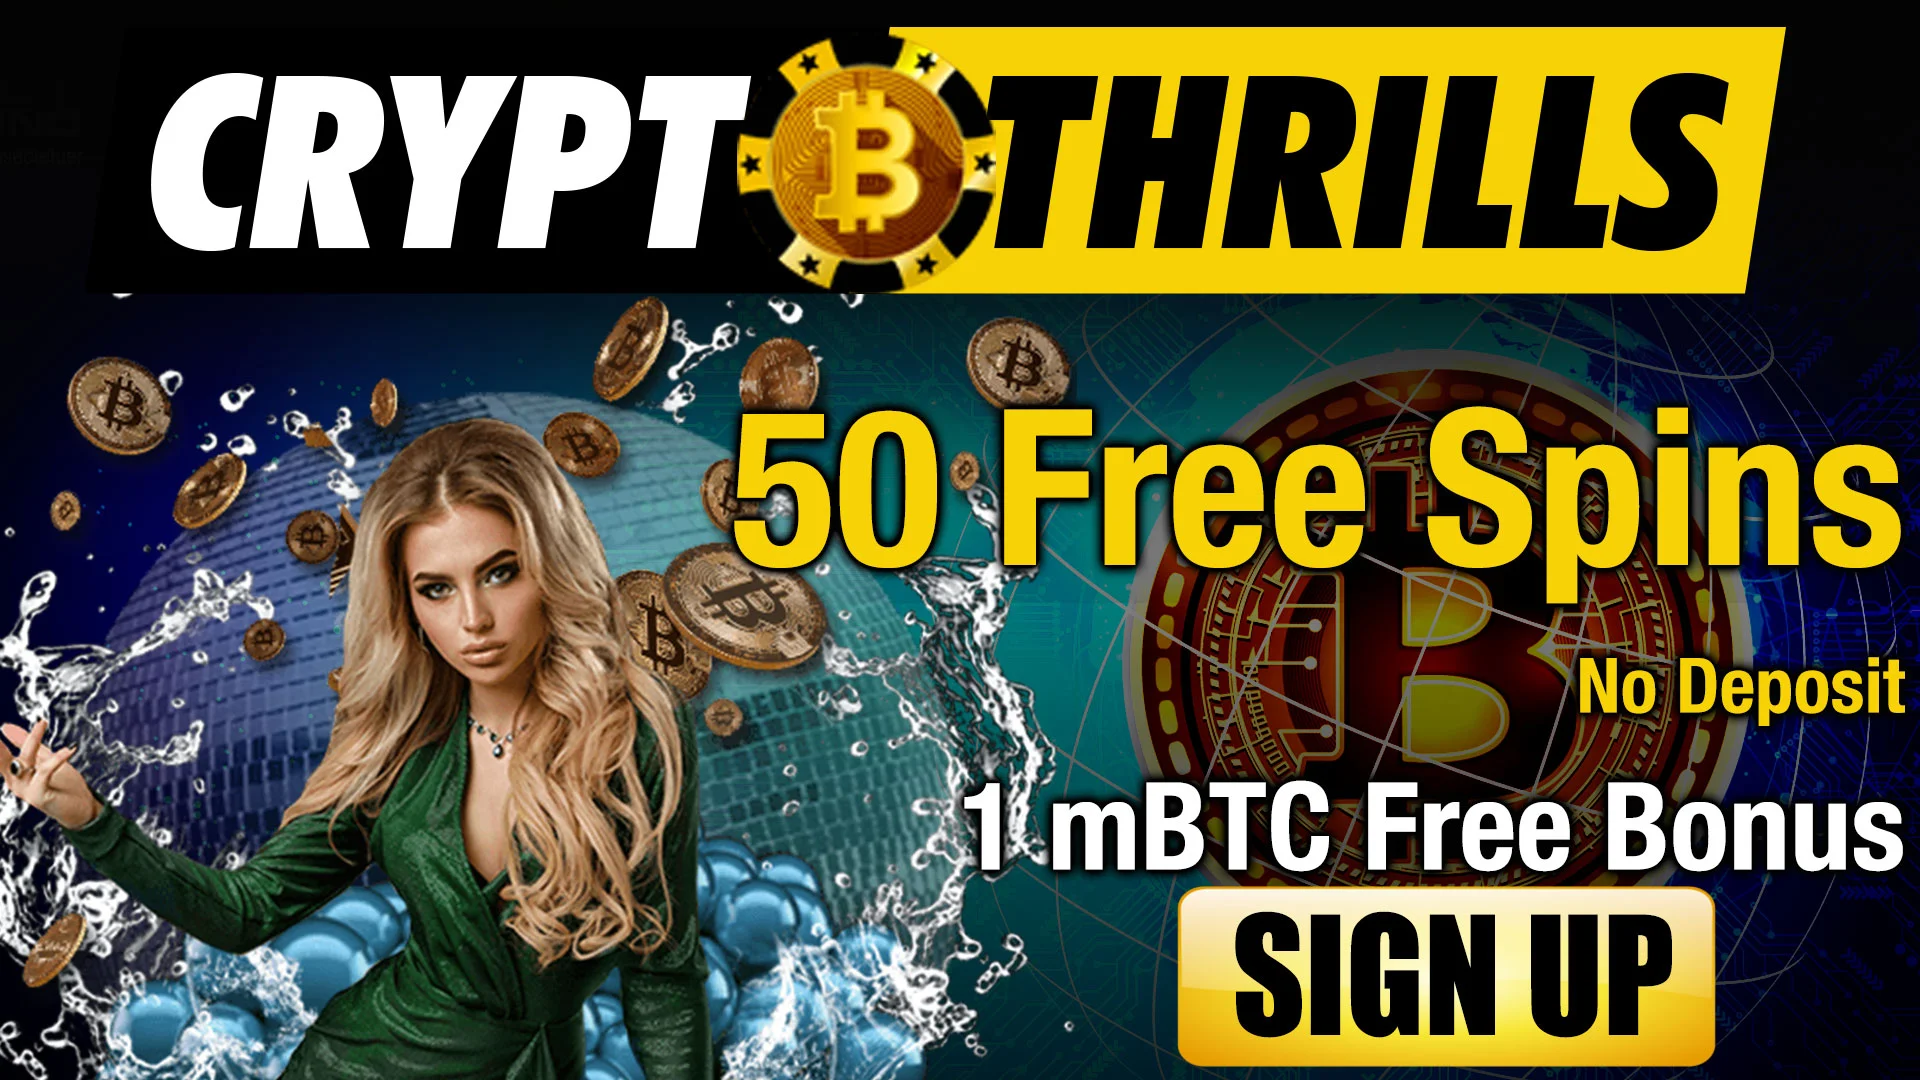 crypto thrills  no deposit bonus